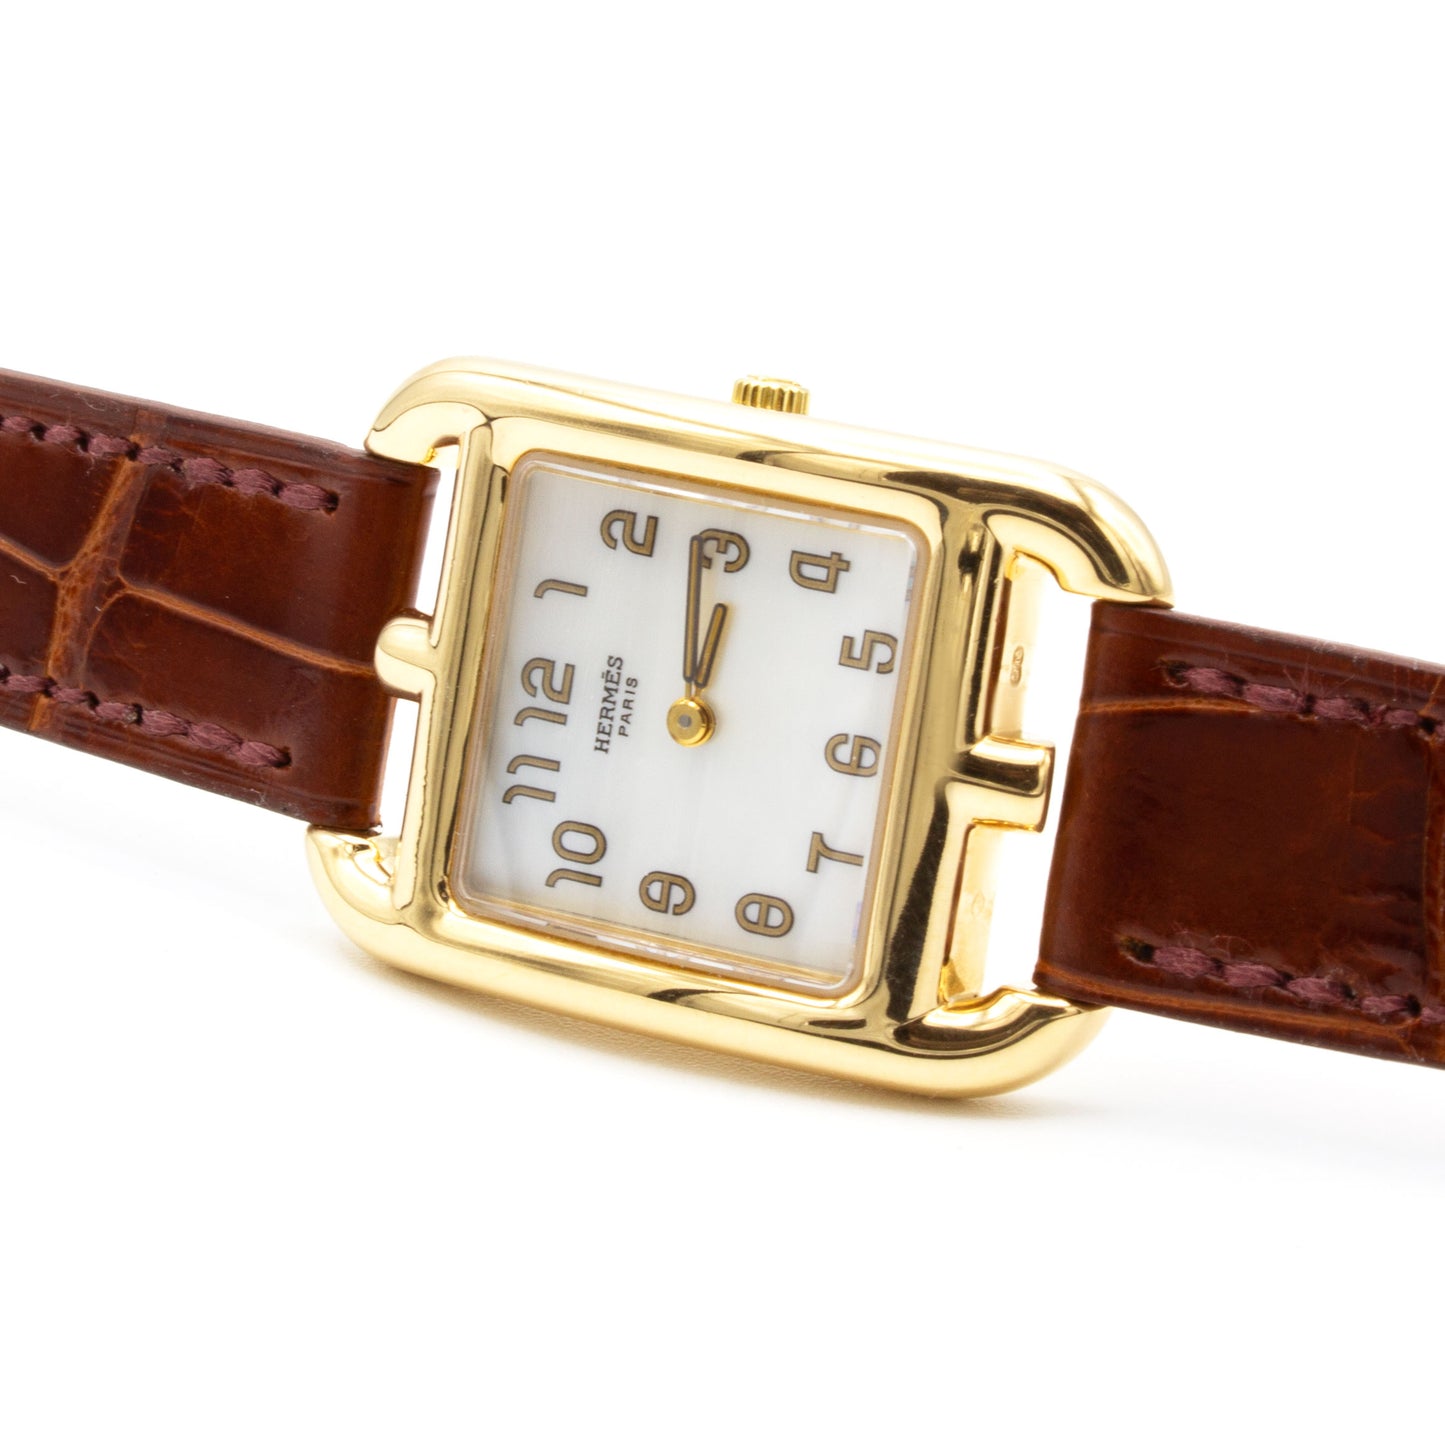 Hermès Cape Cod 18K watch